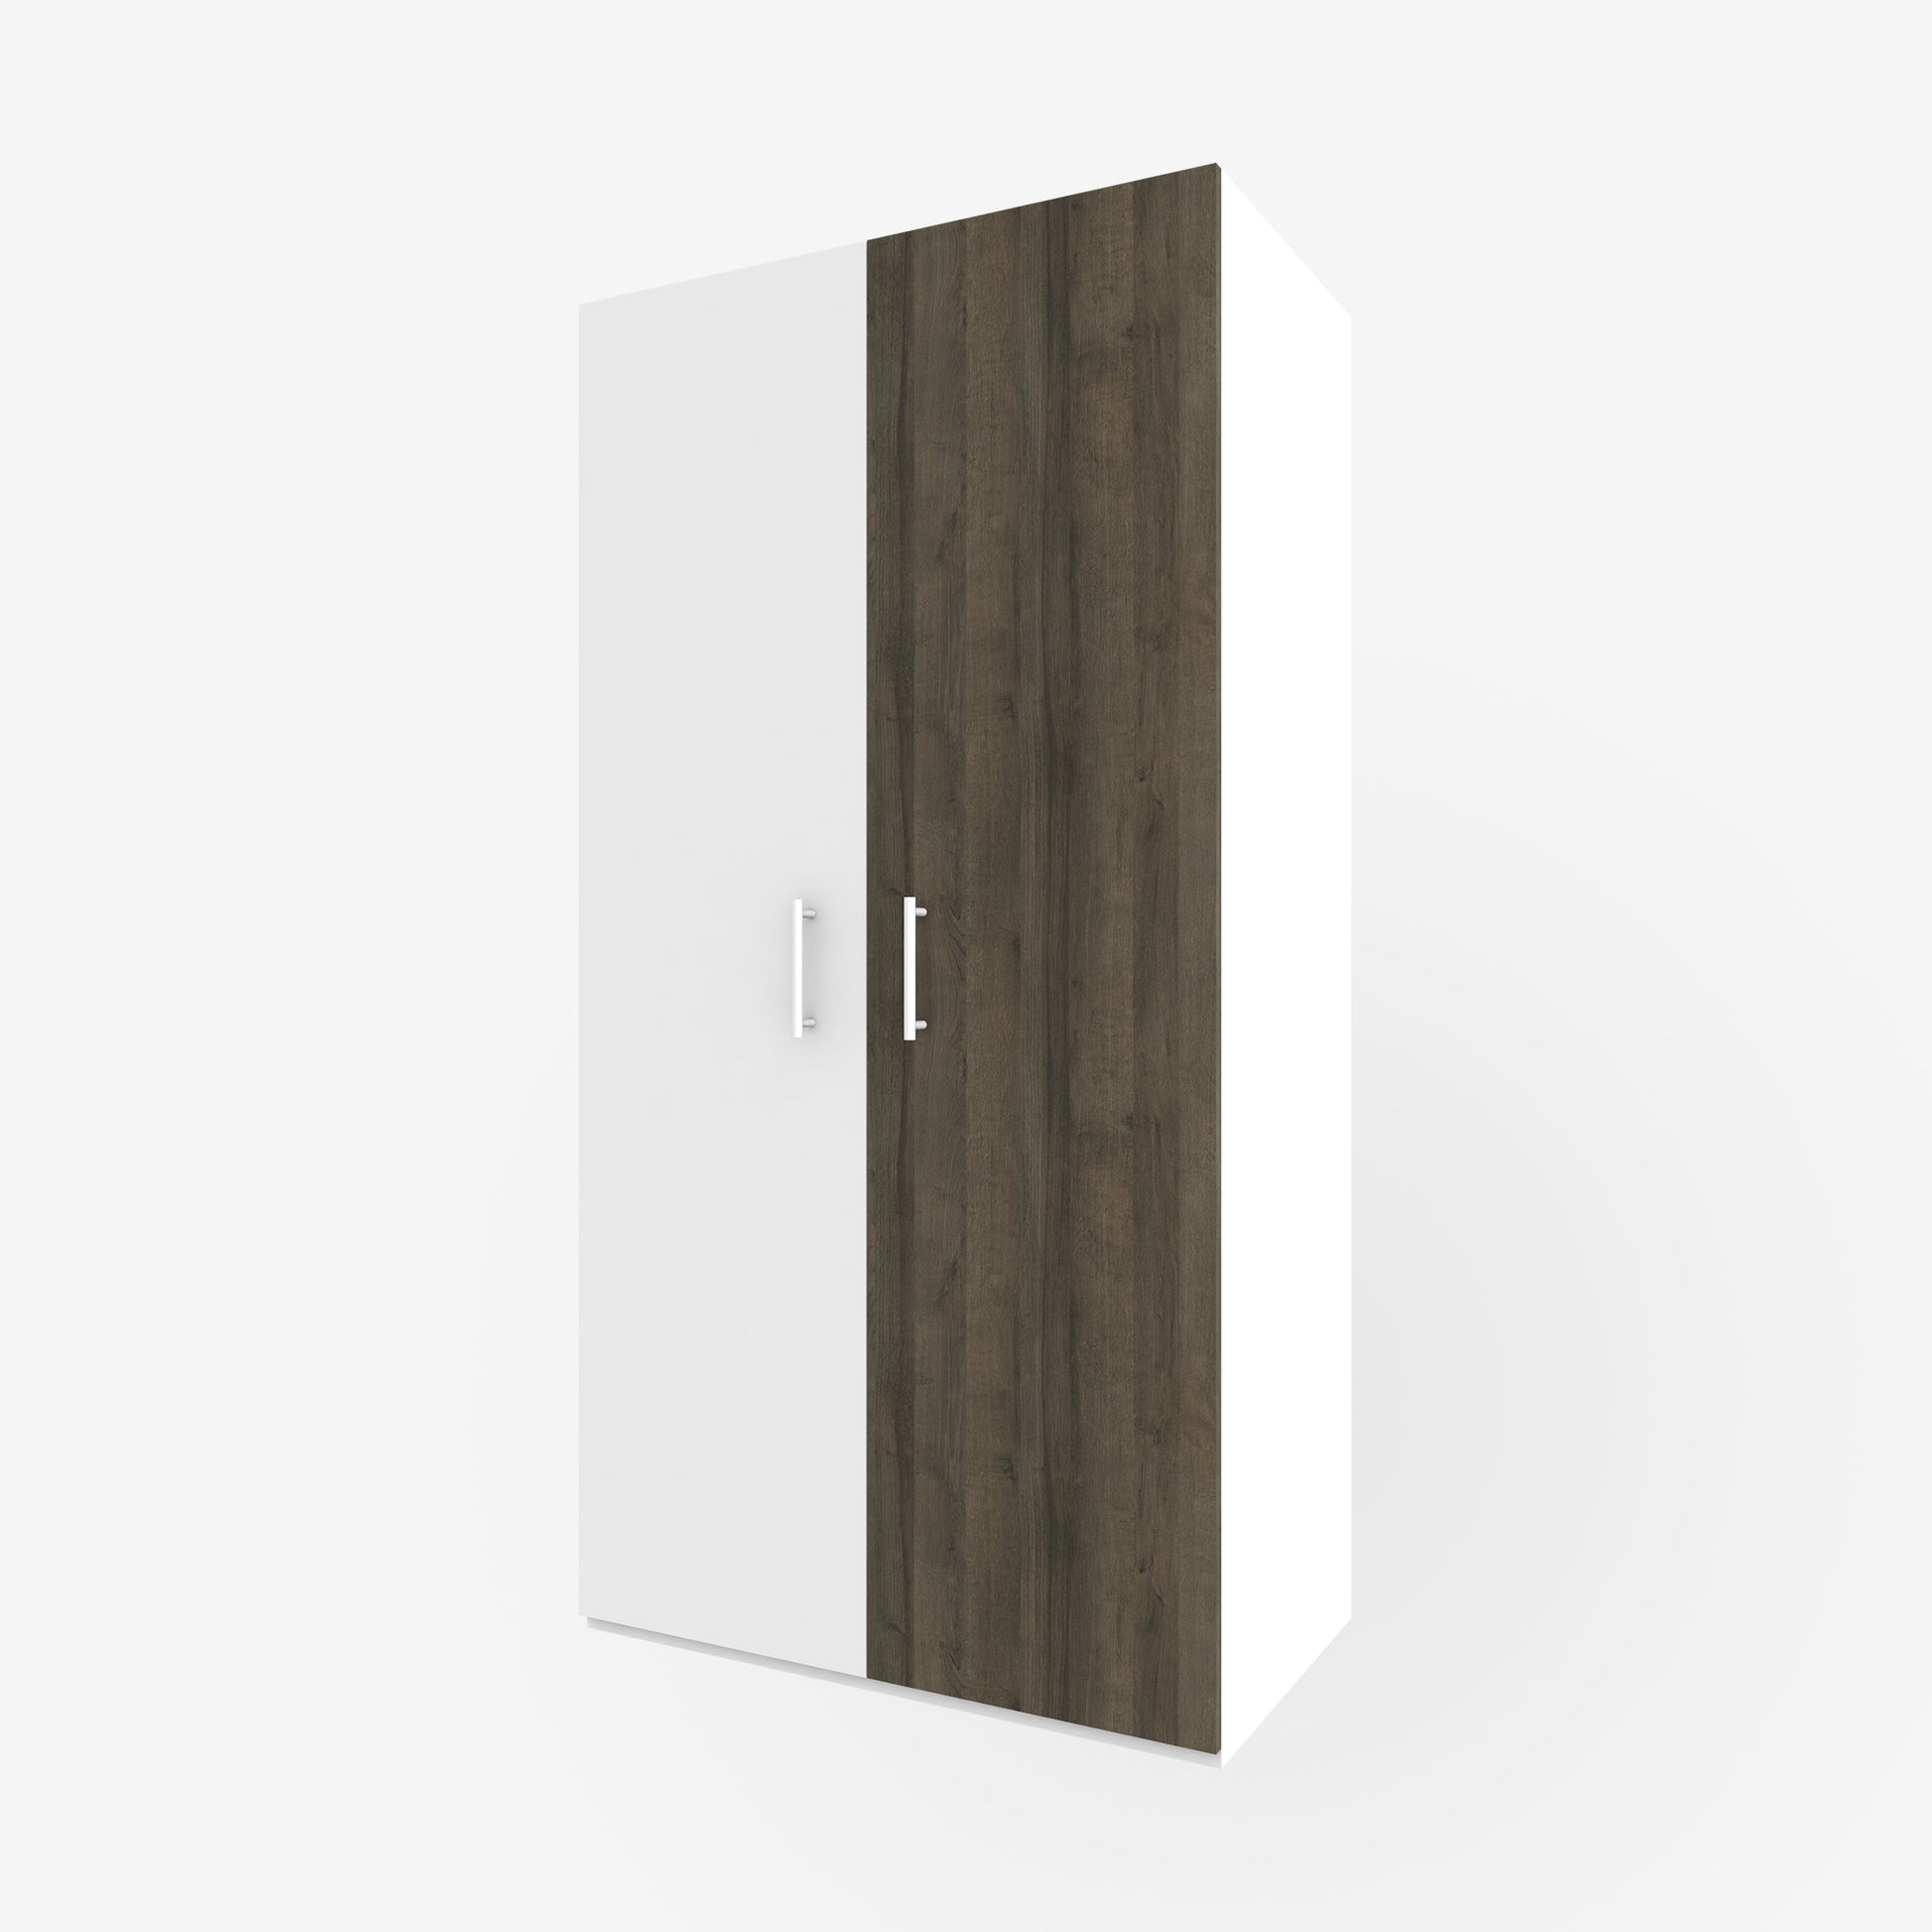 19.5" x 79" dark wood tone rockwood slab door for Ikea or Swedeboxx pax closet cabinet